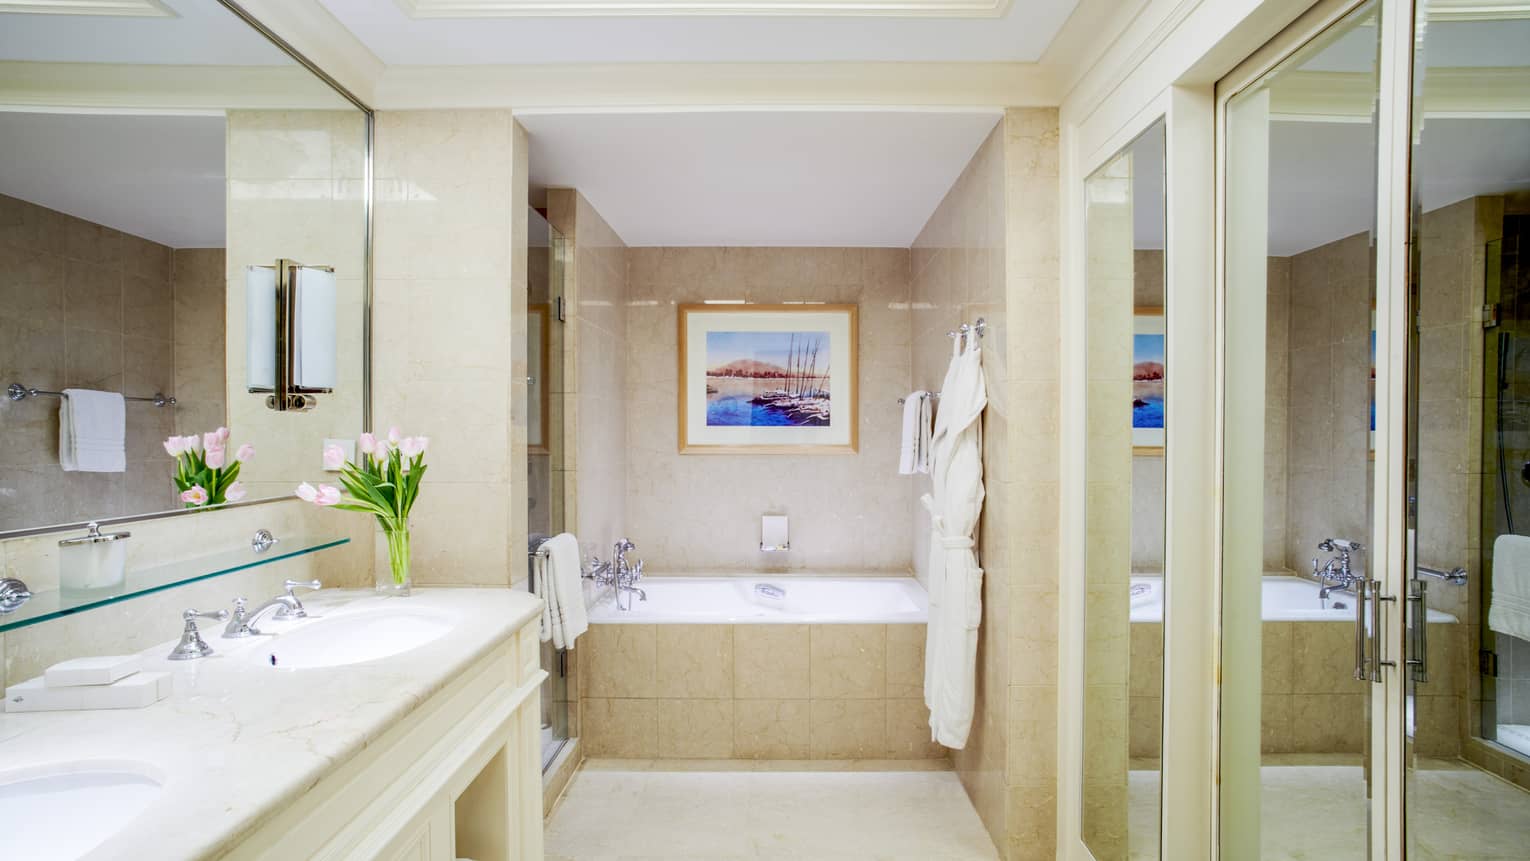 Premium Executive Suite bathroom with double vanity, full-width mirror, in-ground soaking tub, mirrored sliding doors to closet